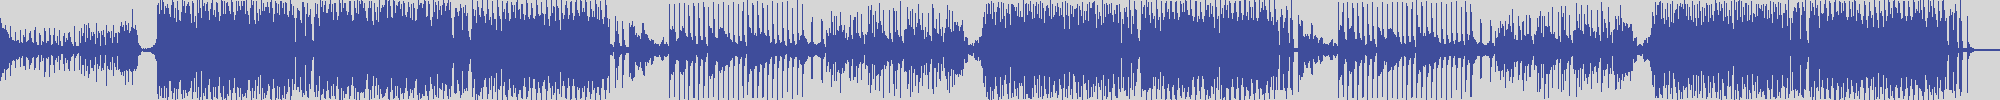 nf_boyz_records [NFY024] Tim Franklin - Mithos [Original Mix] audio wave form